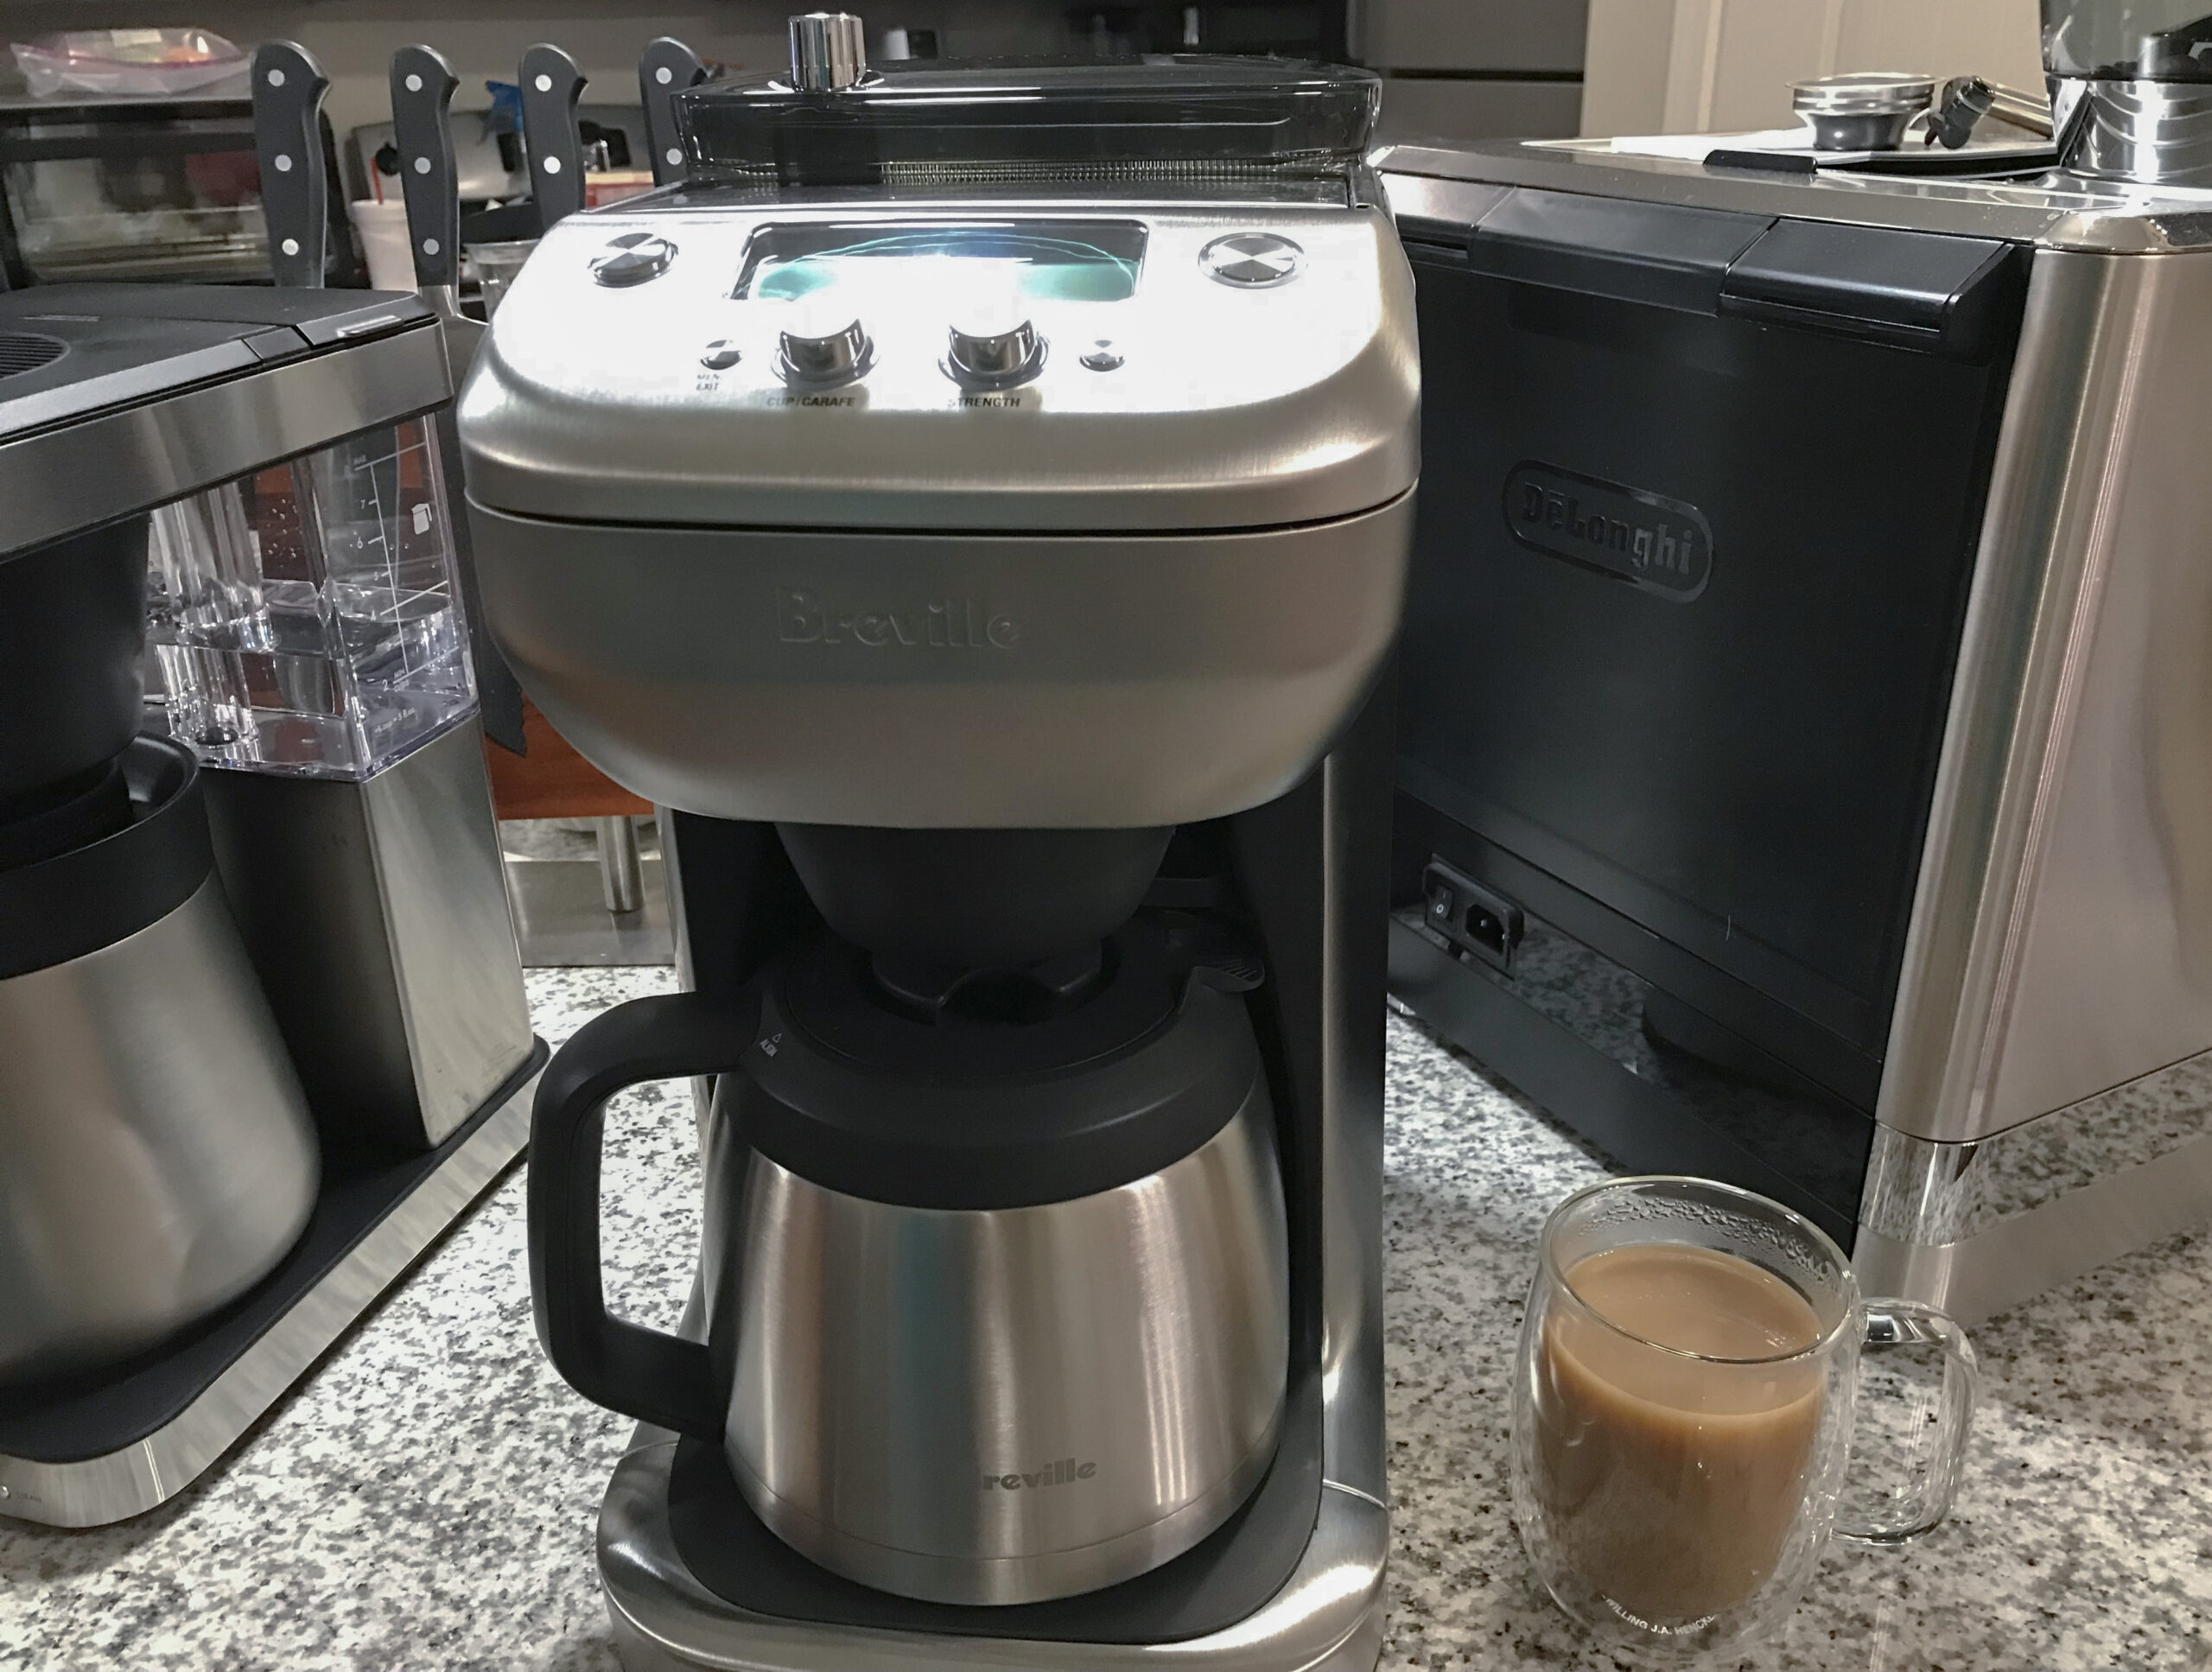 https://www.popsci.com/uploads/2023/08/01/Breville-Grind-Control-best-with-grinder-drip-coffee-maker-scaled.jpeg?auto=webp&width=800&crop=16:10,offset-x50